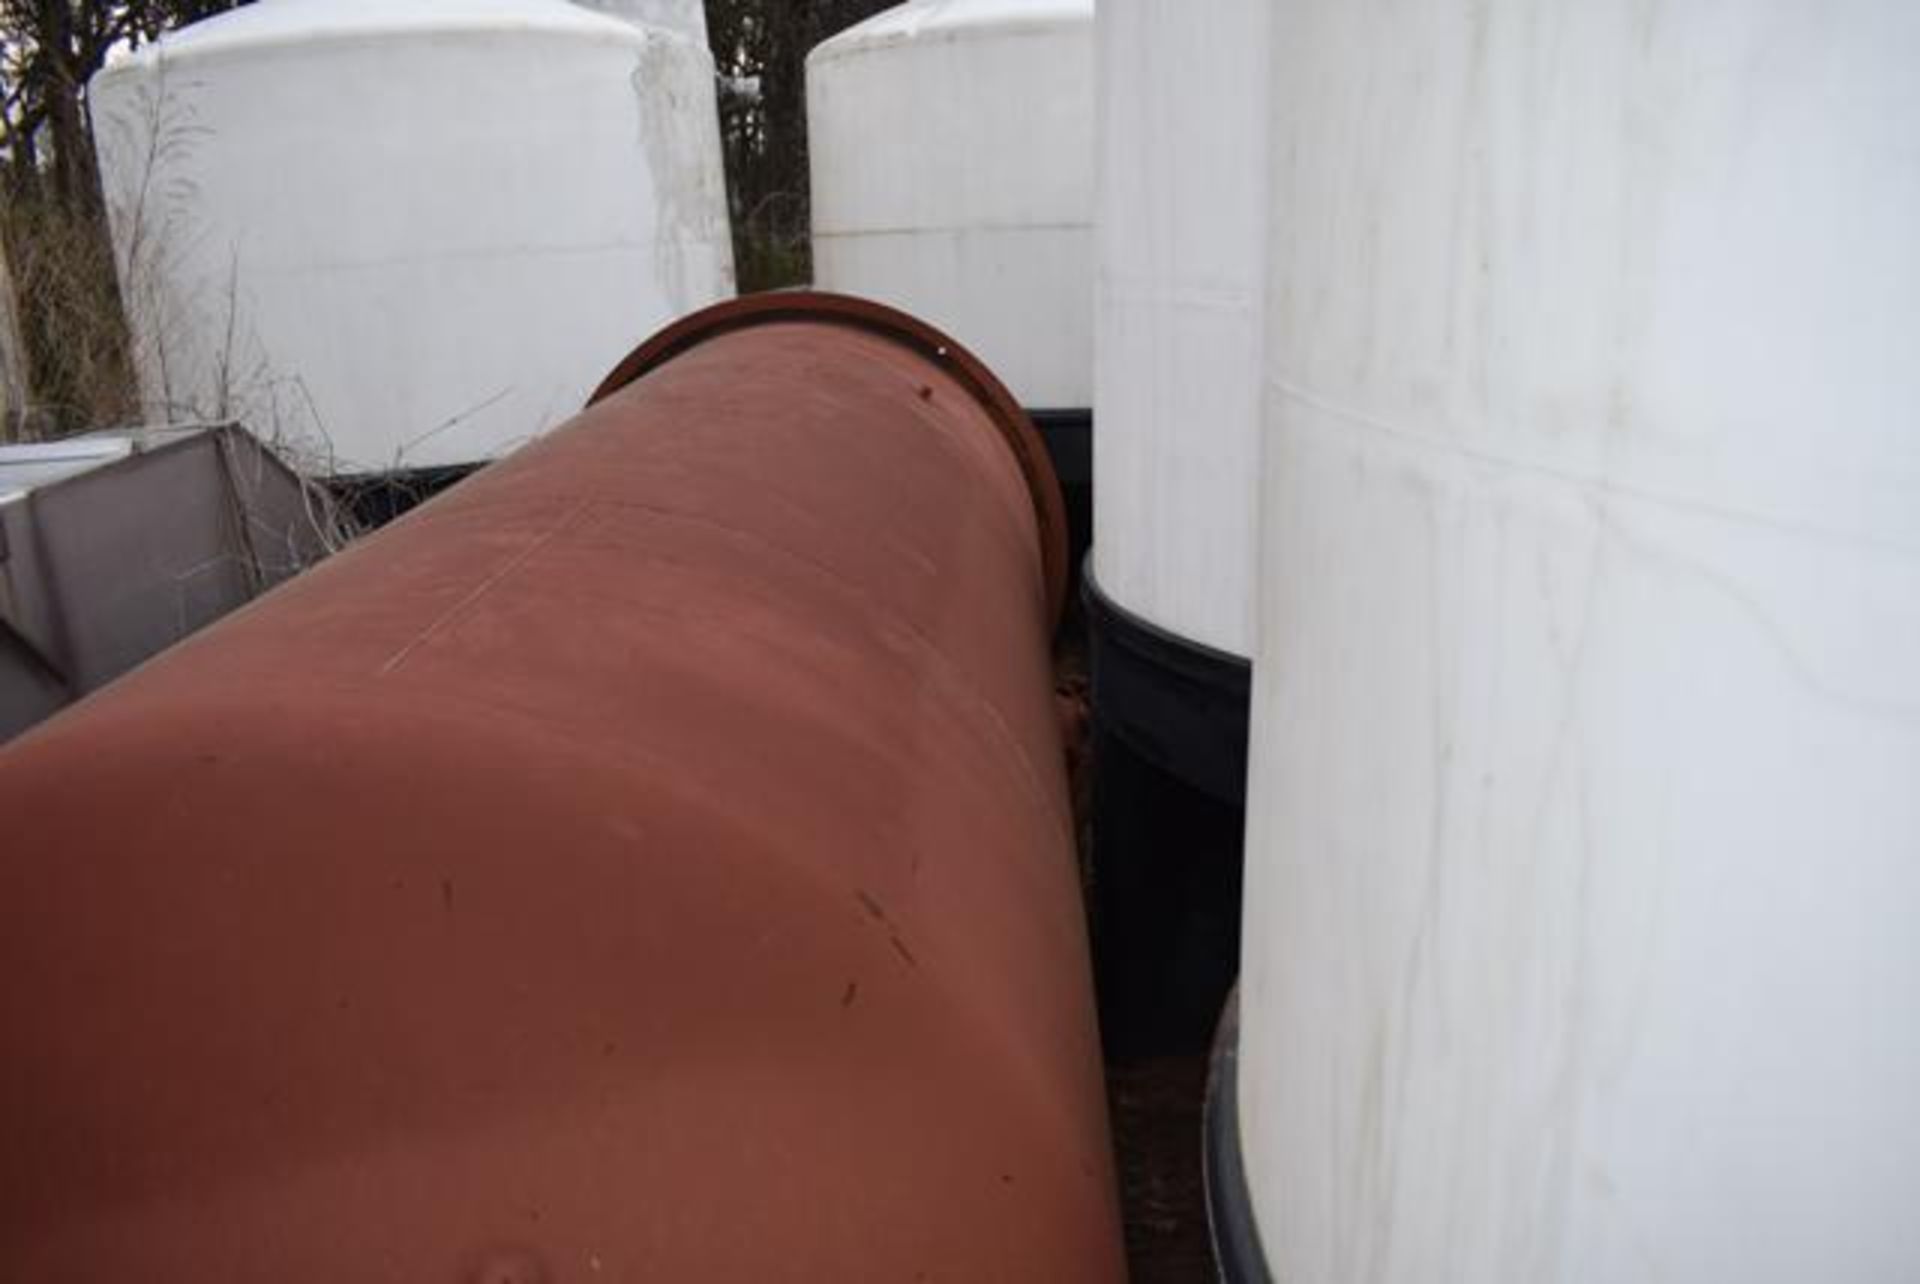 Azco Carbon Steel Tank, 64 in. Diameter x 12 ft. Top - Bottom, Side Port Hole - Image 3 of 3